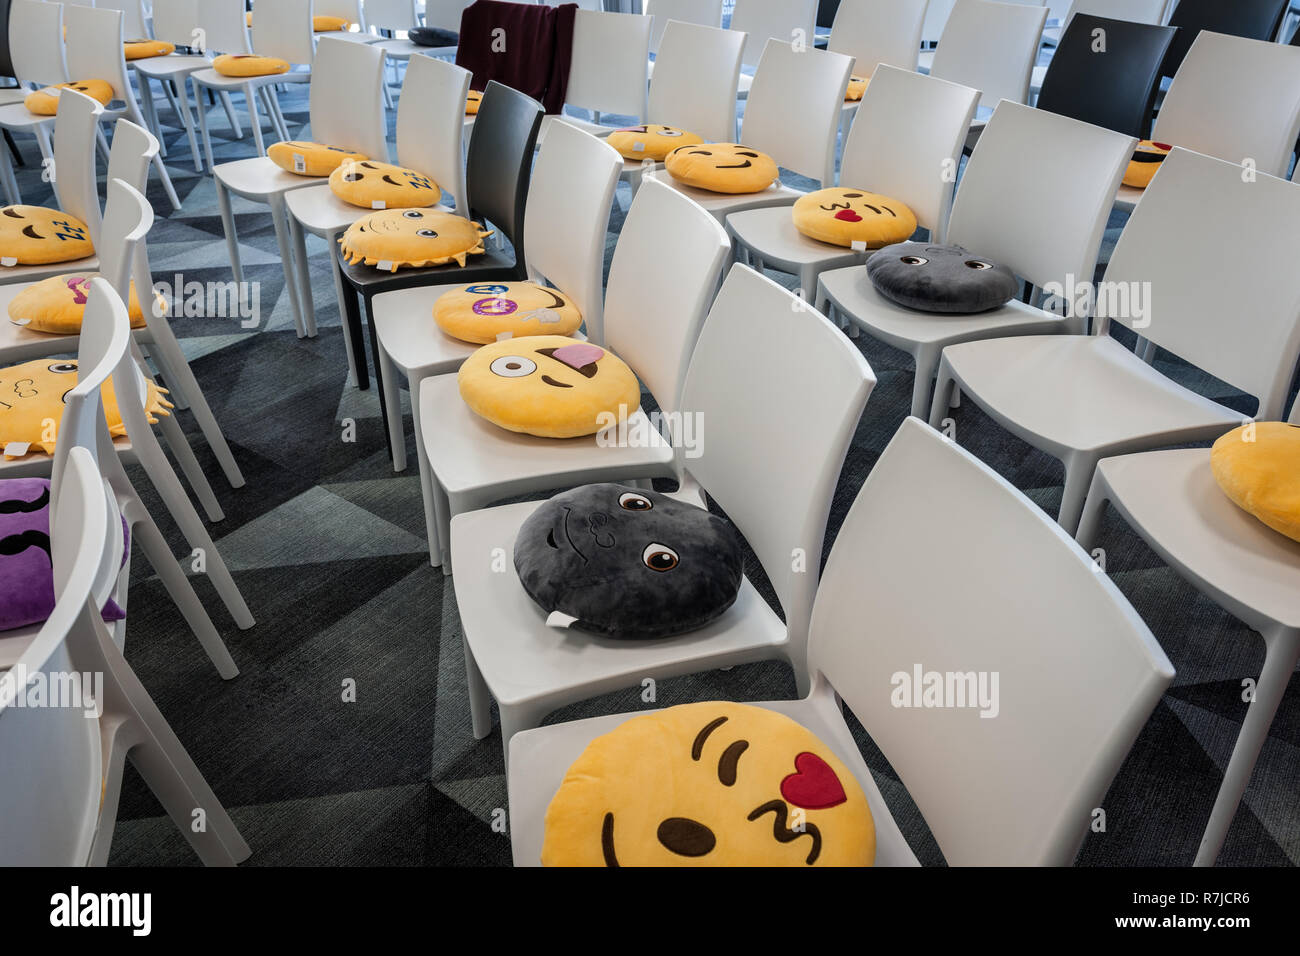 emoji cushions on chairs Stock Photo